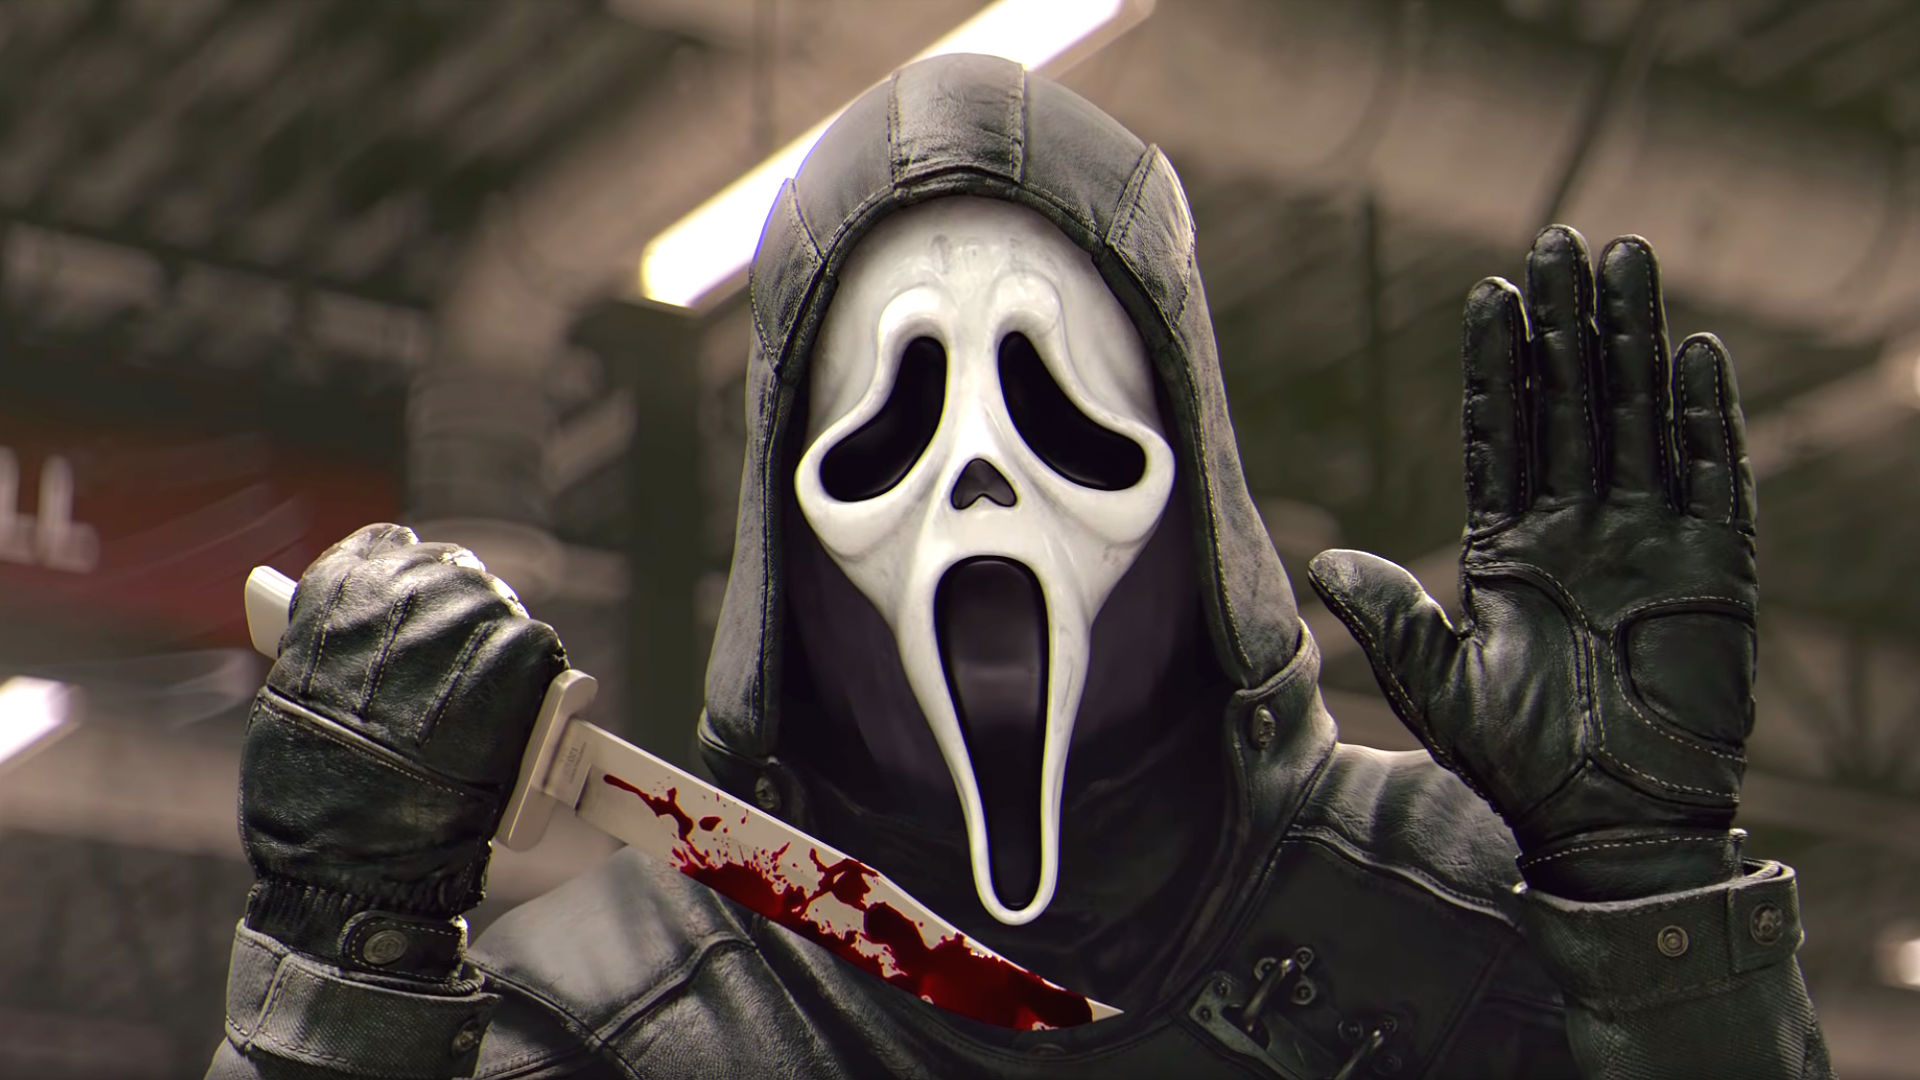 Dead by Daylight’s next killer is Ghostface